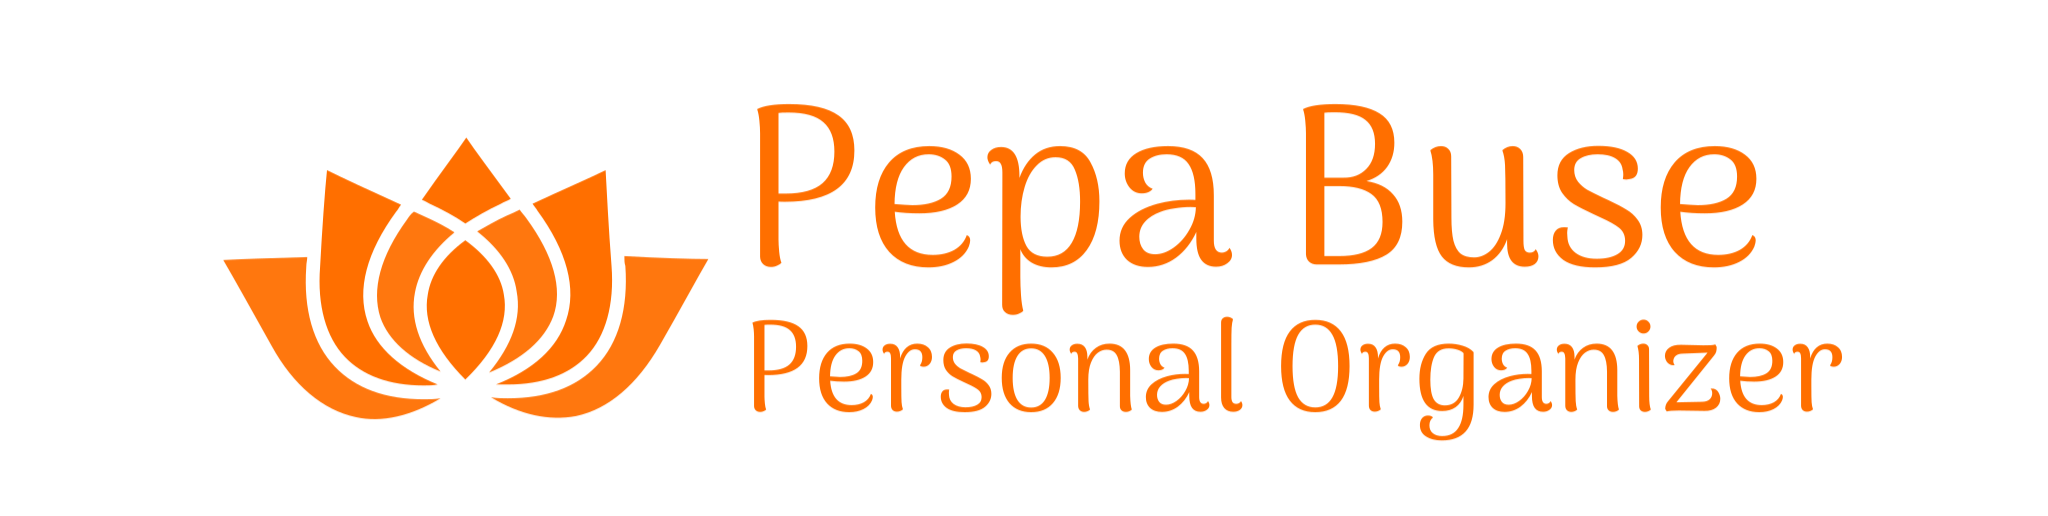 Pepa Buse Personal Organizer